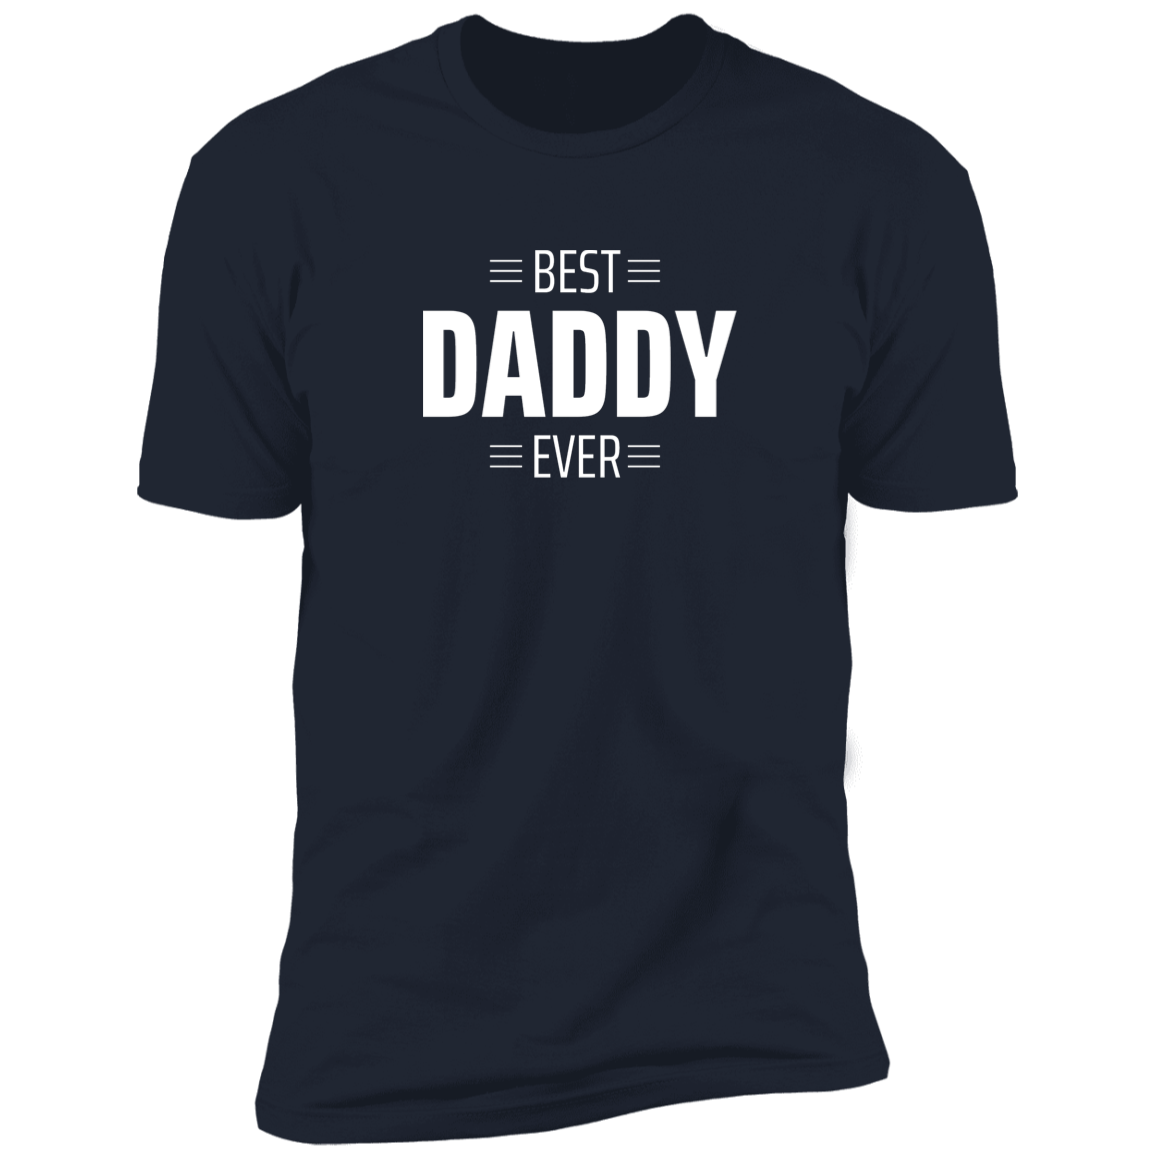 Midnighat Navy Shirt Short Sleeve - Best daddy Ever